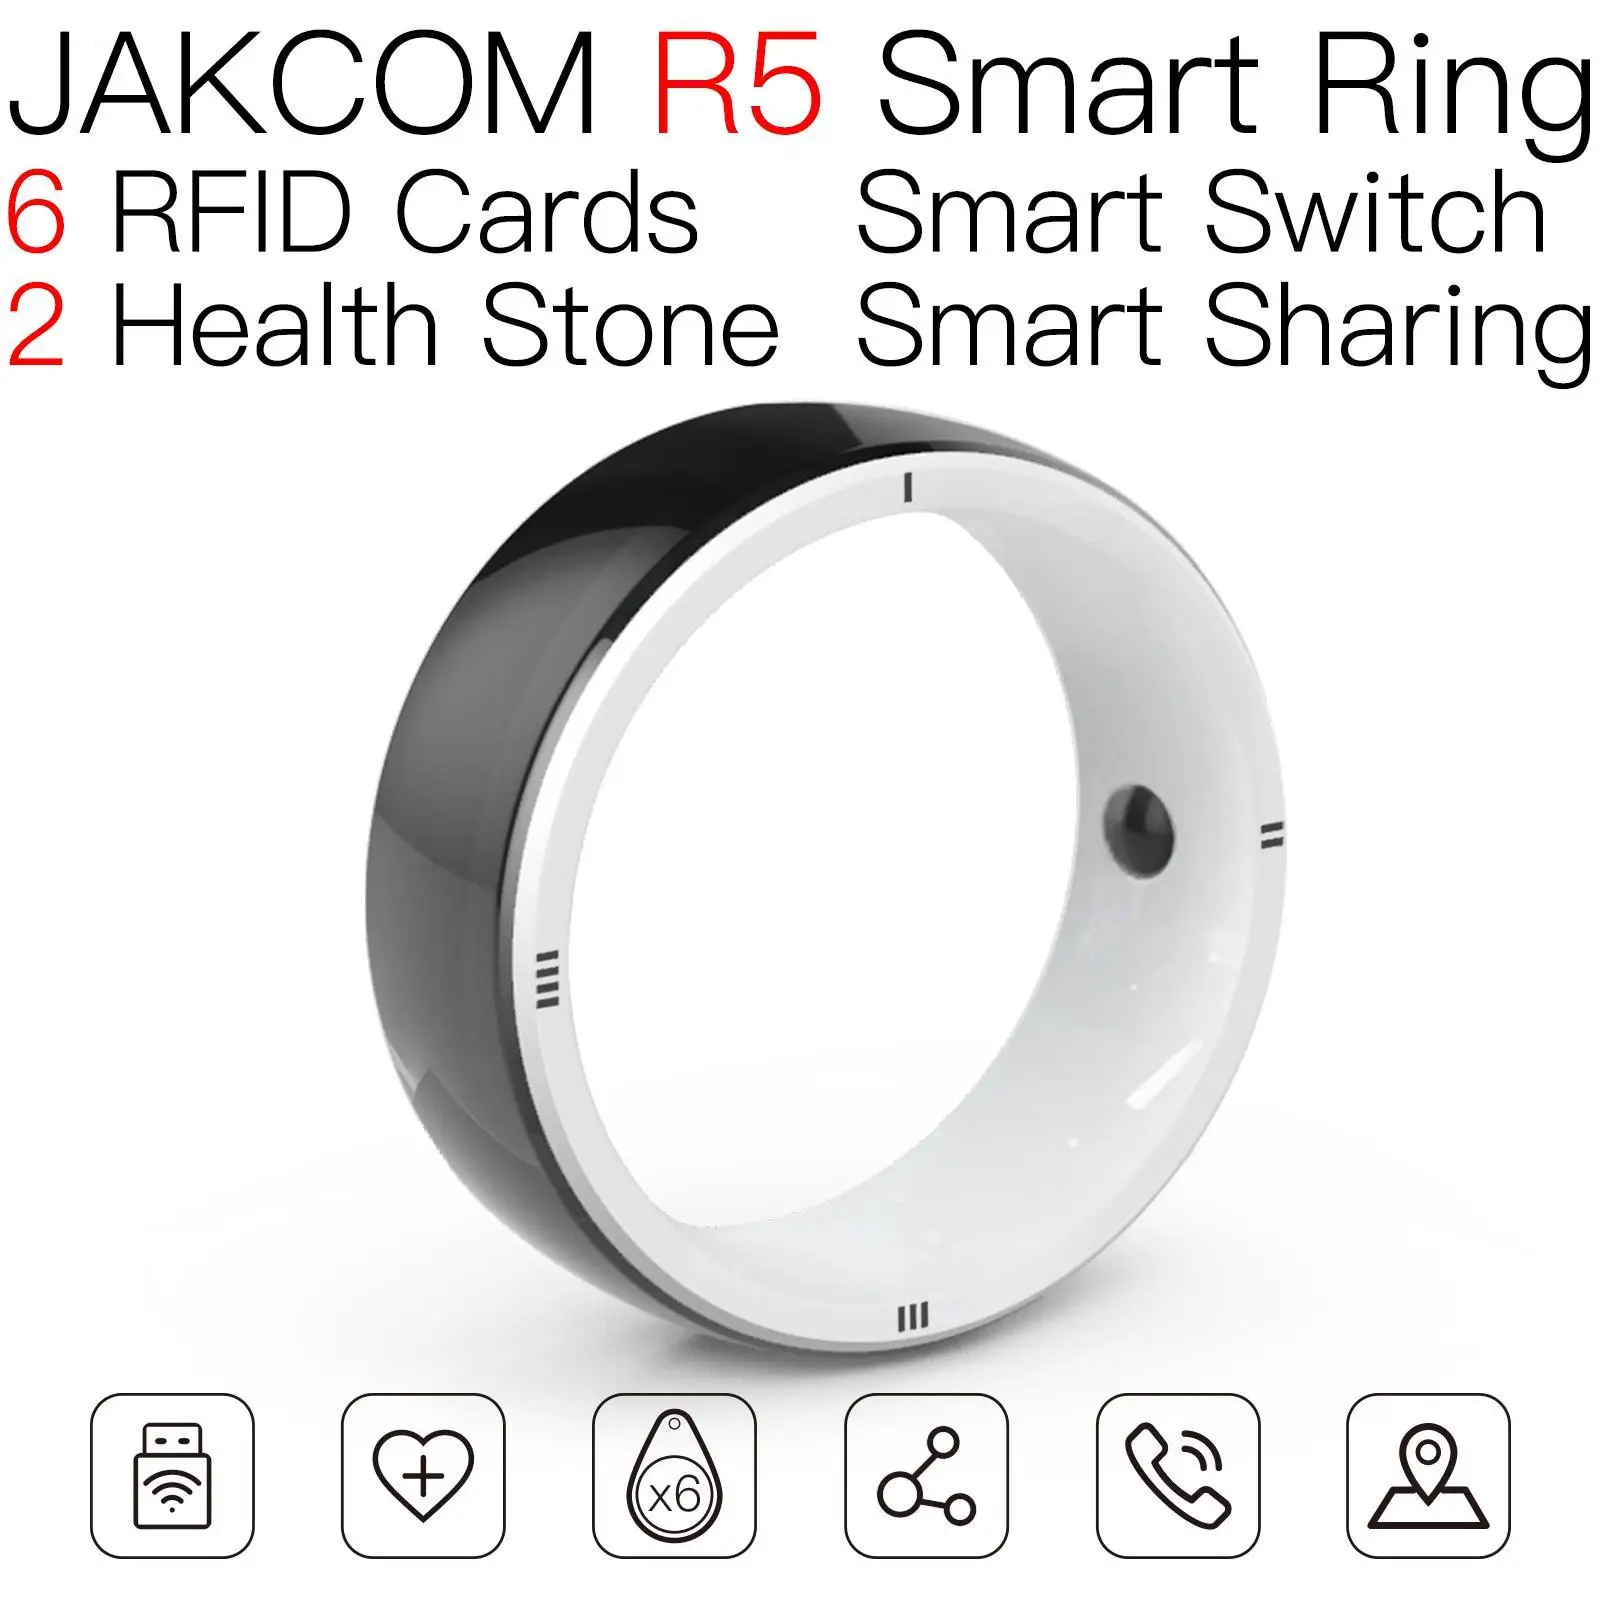 

JAKCOM R5 Smart Ring Super value as vegetables slicer flipper zero sticker price tags rfid 125 khz coil uhf wiegand free